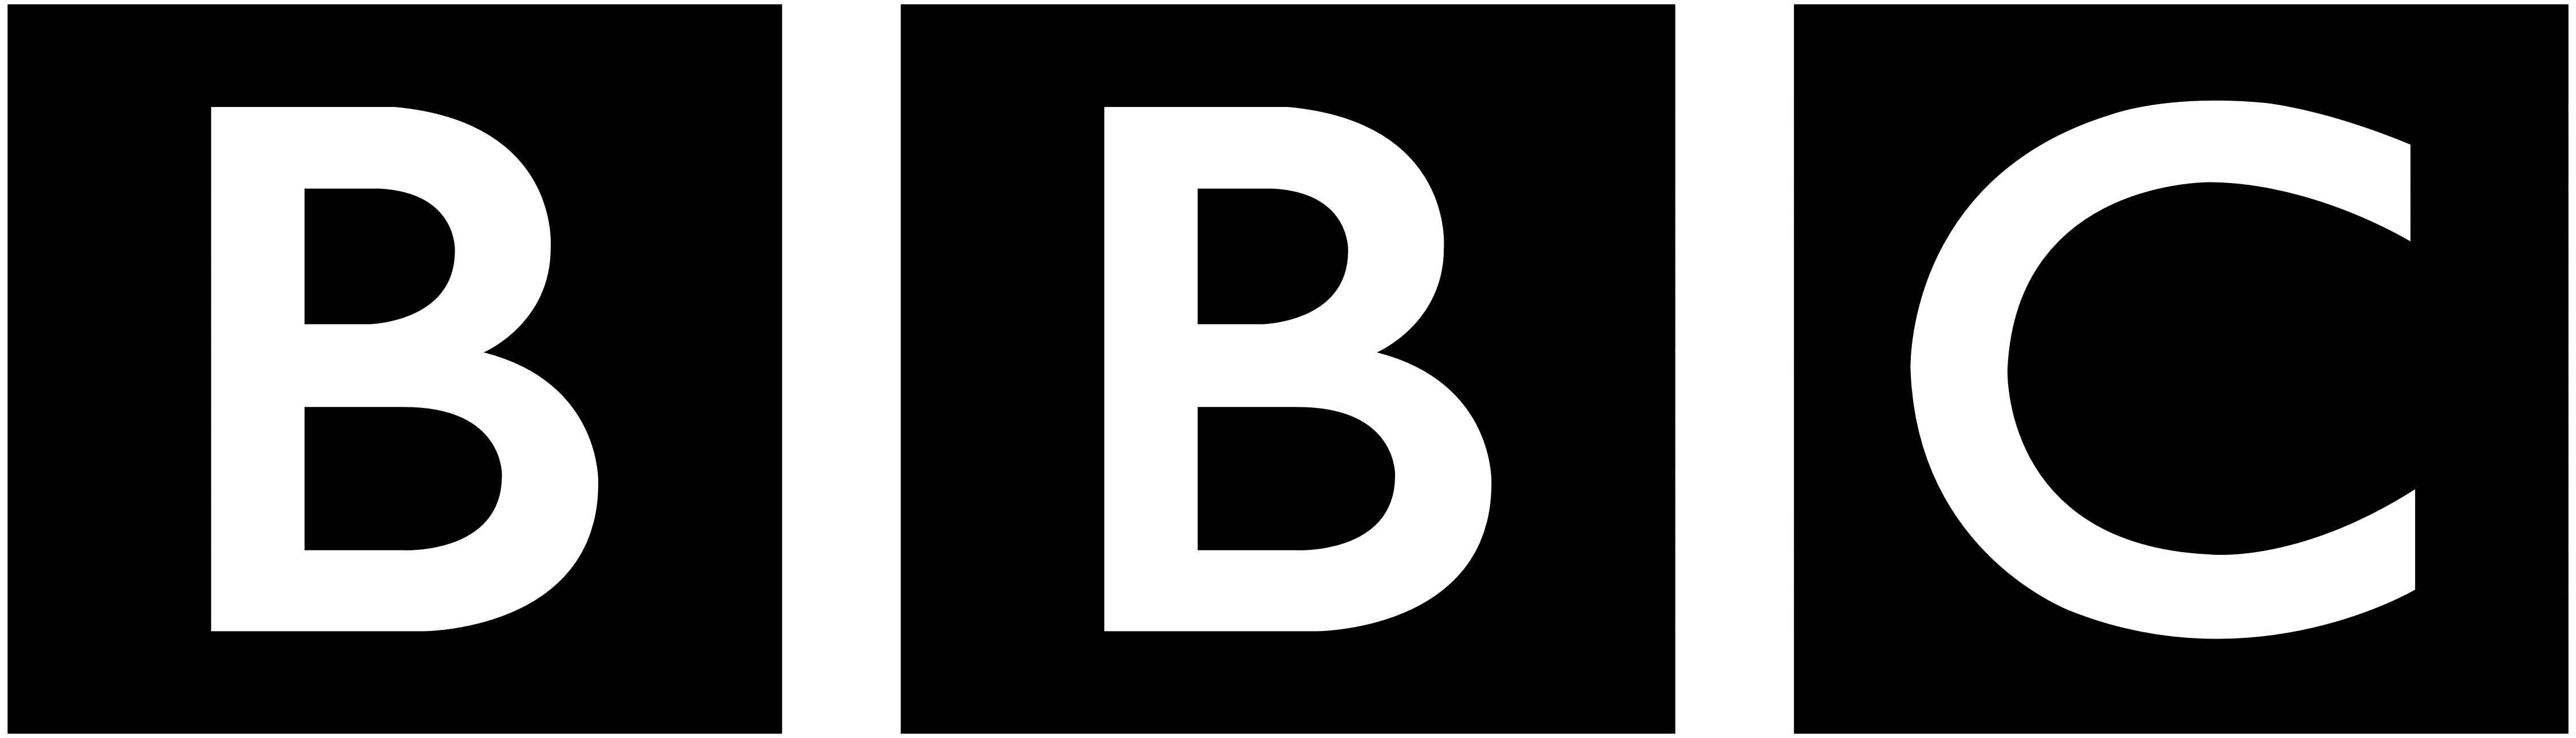 Bbc News Logo Png - Bbc World